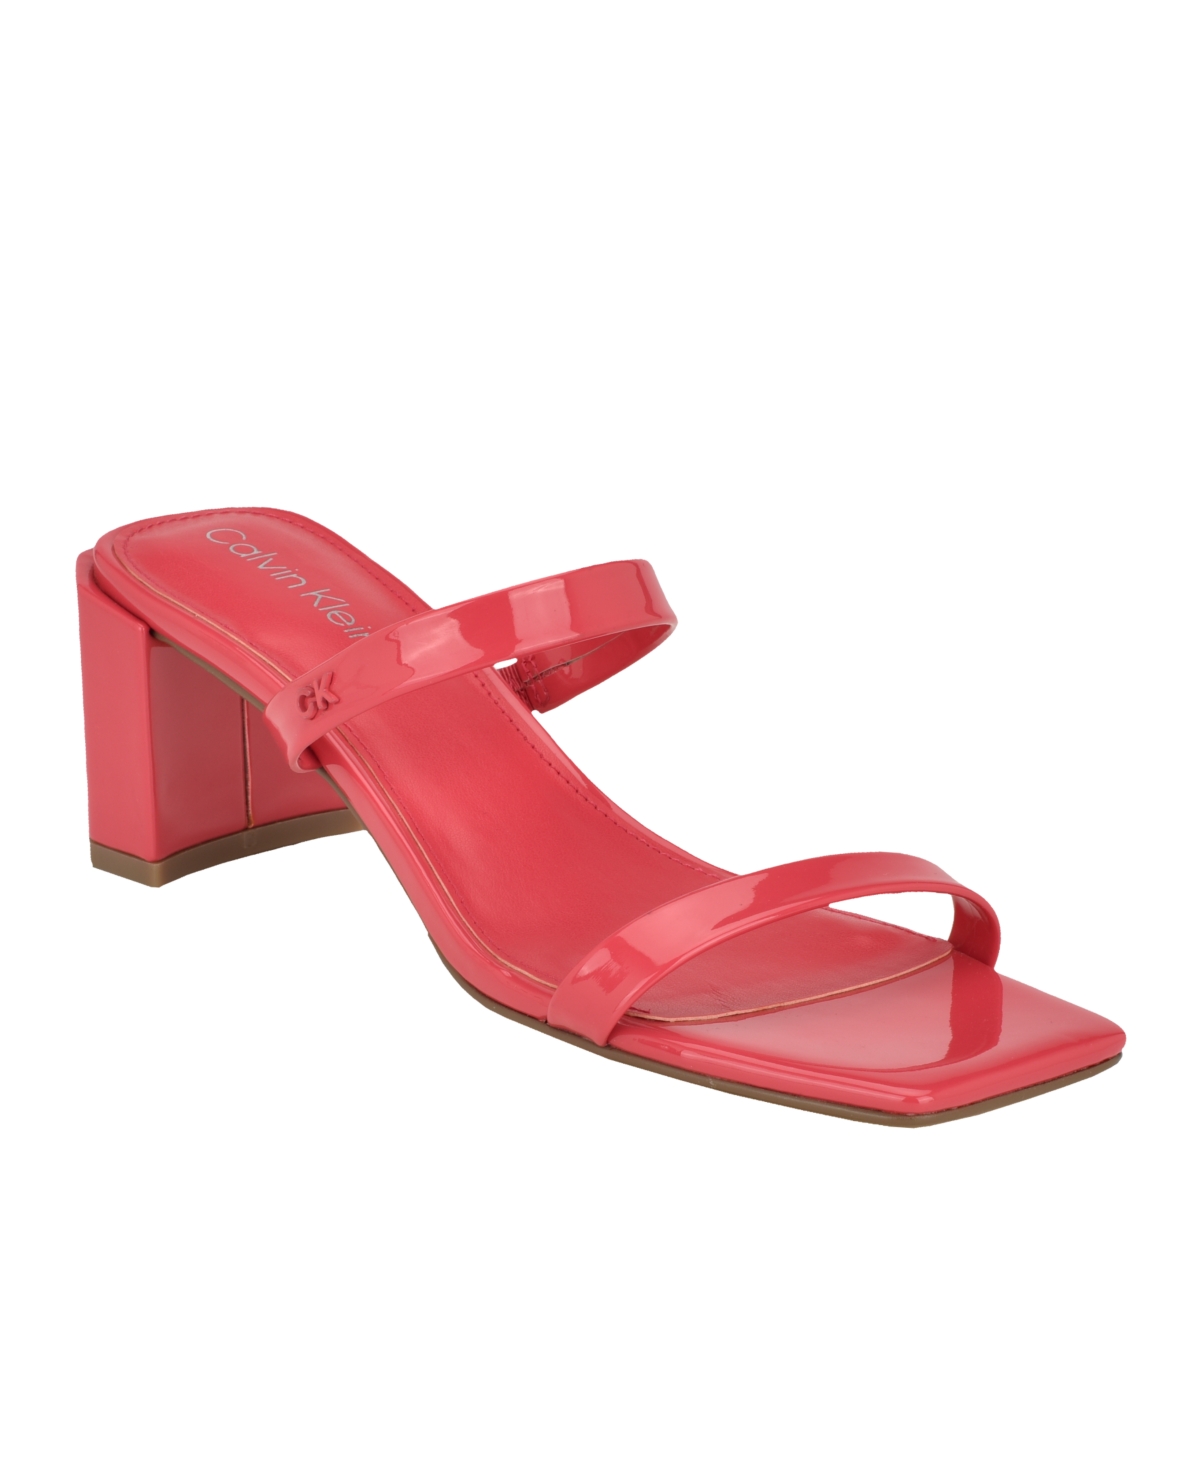 Calvin Klein Kater Slide Sandal In Dark Pink - Man Made With Manmade Sole